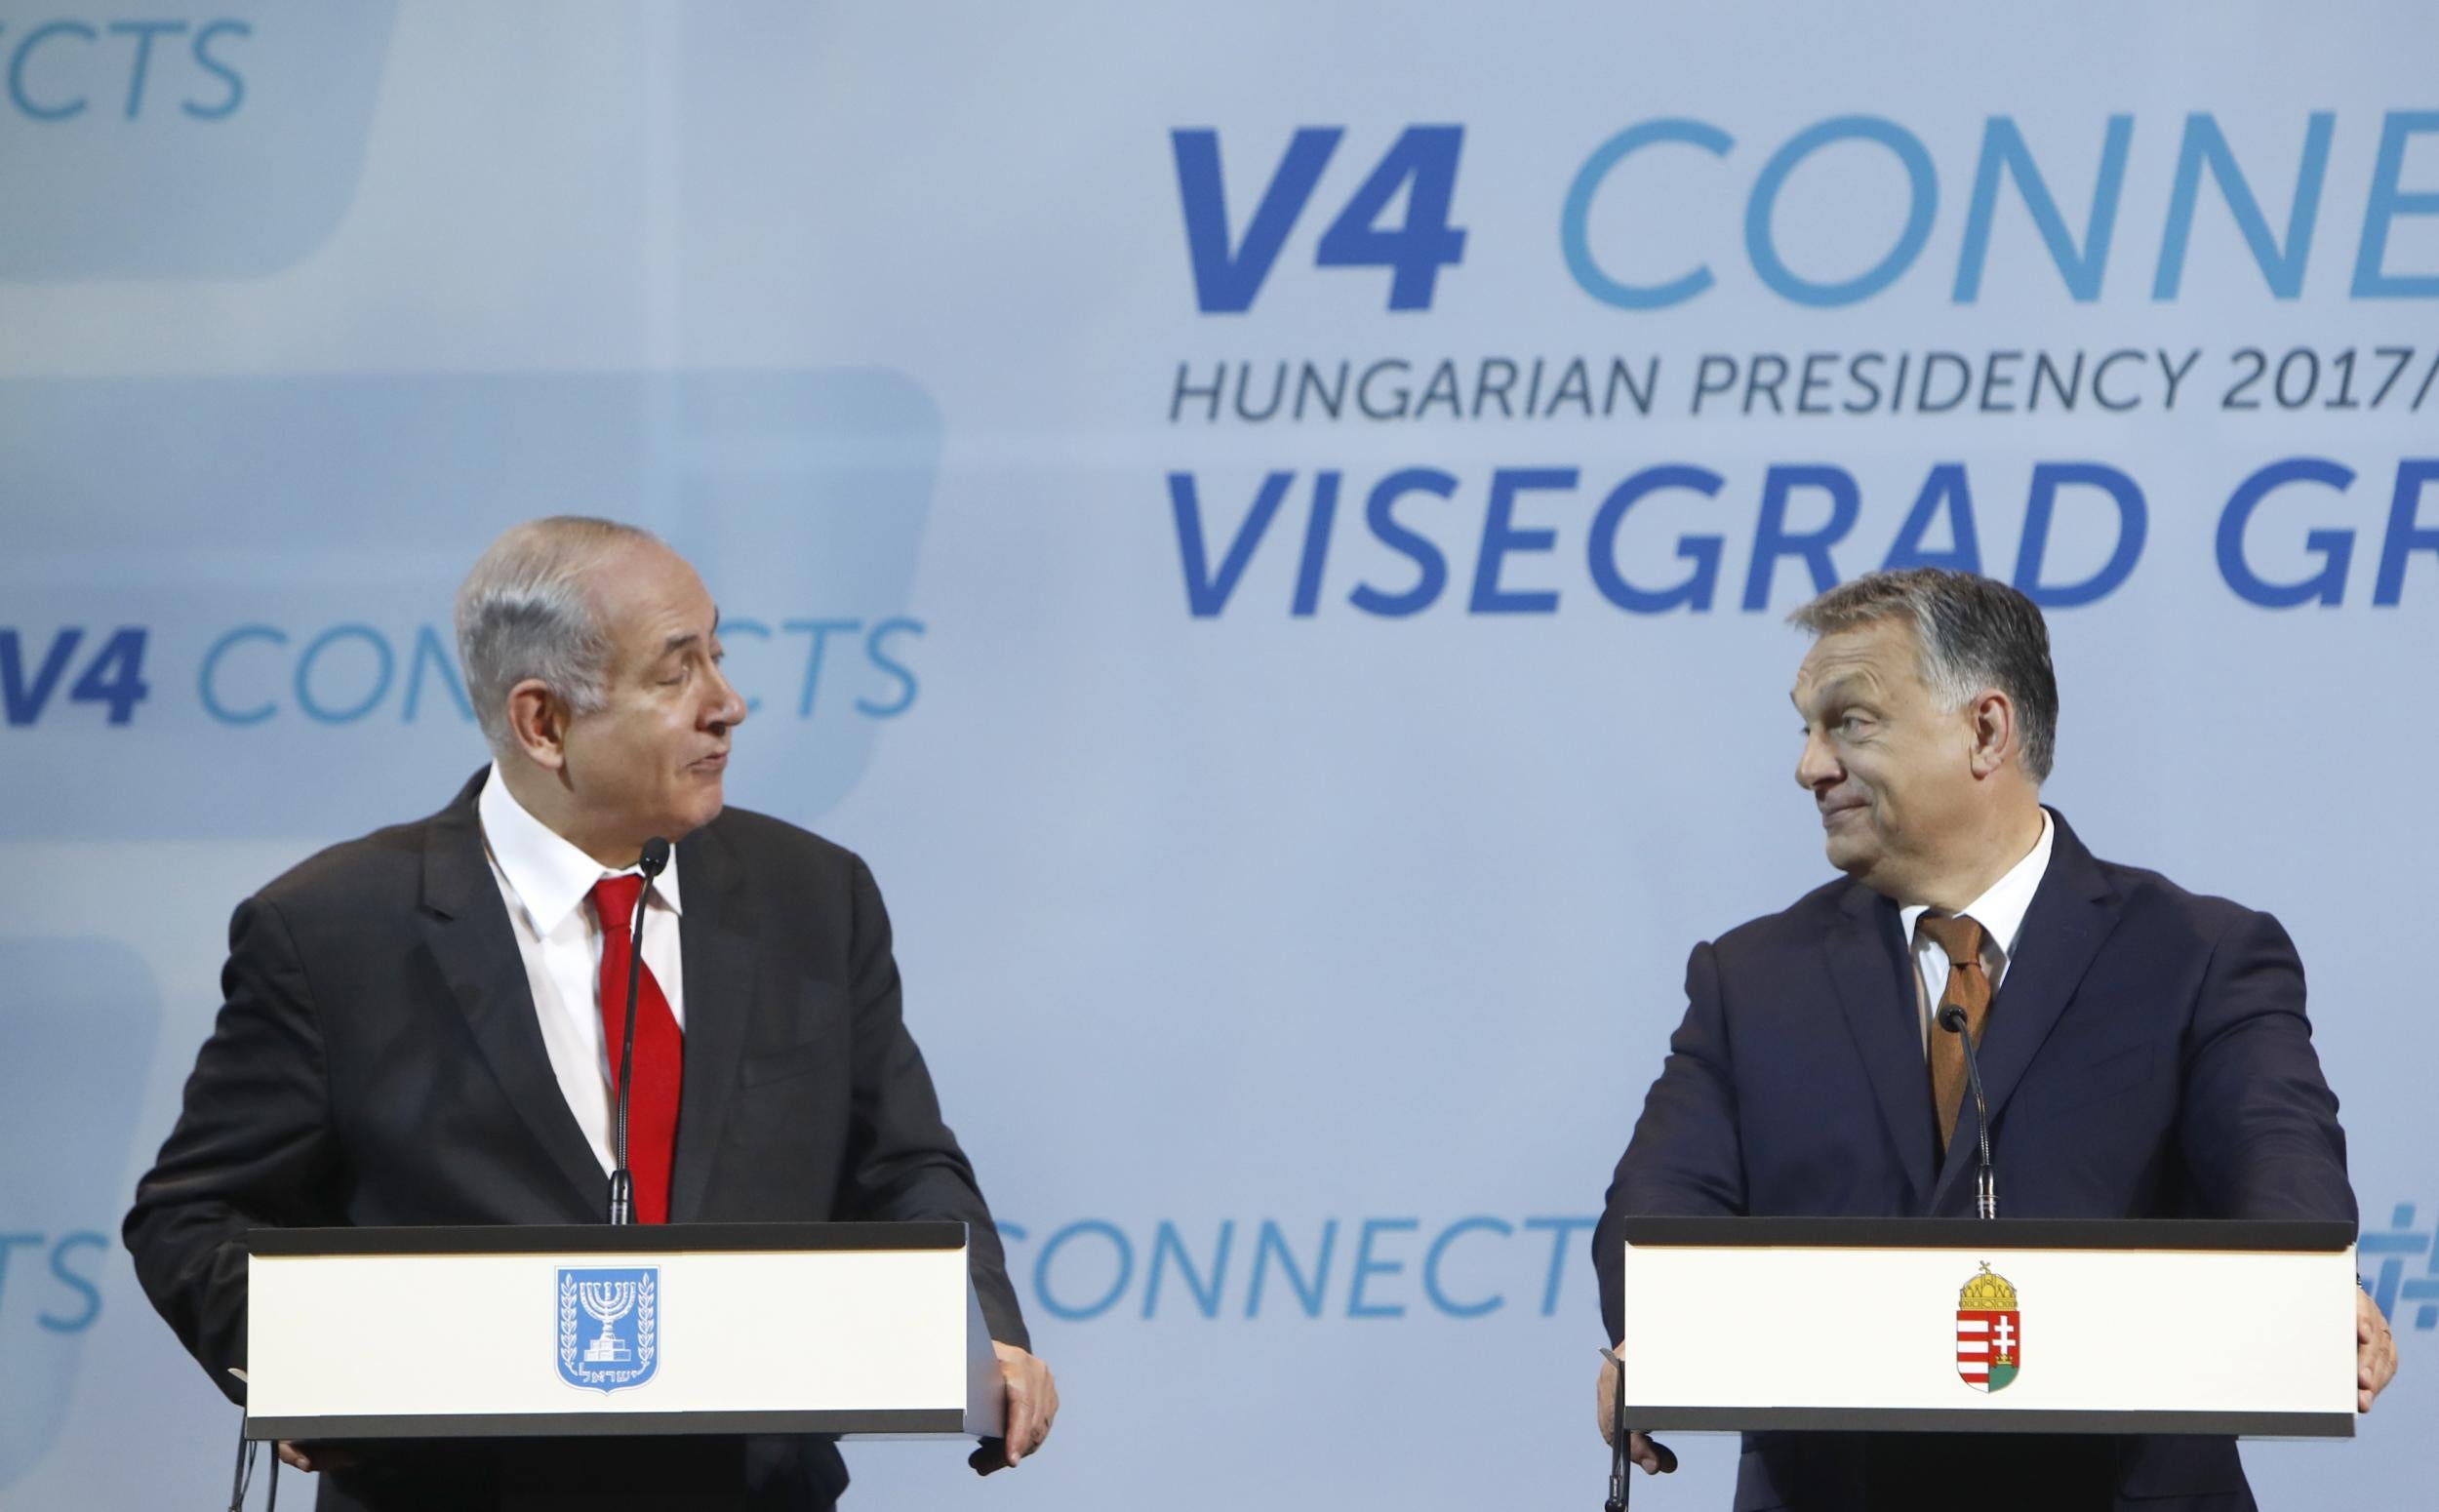 Israel's Prime Minister Benjamin Netanyahu (L) and his Hungarian counterpart Viktor Orban attend a news conference with the Visegrad Group Prime Ministers in Budapest, Hungary on 19 July 2017